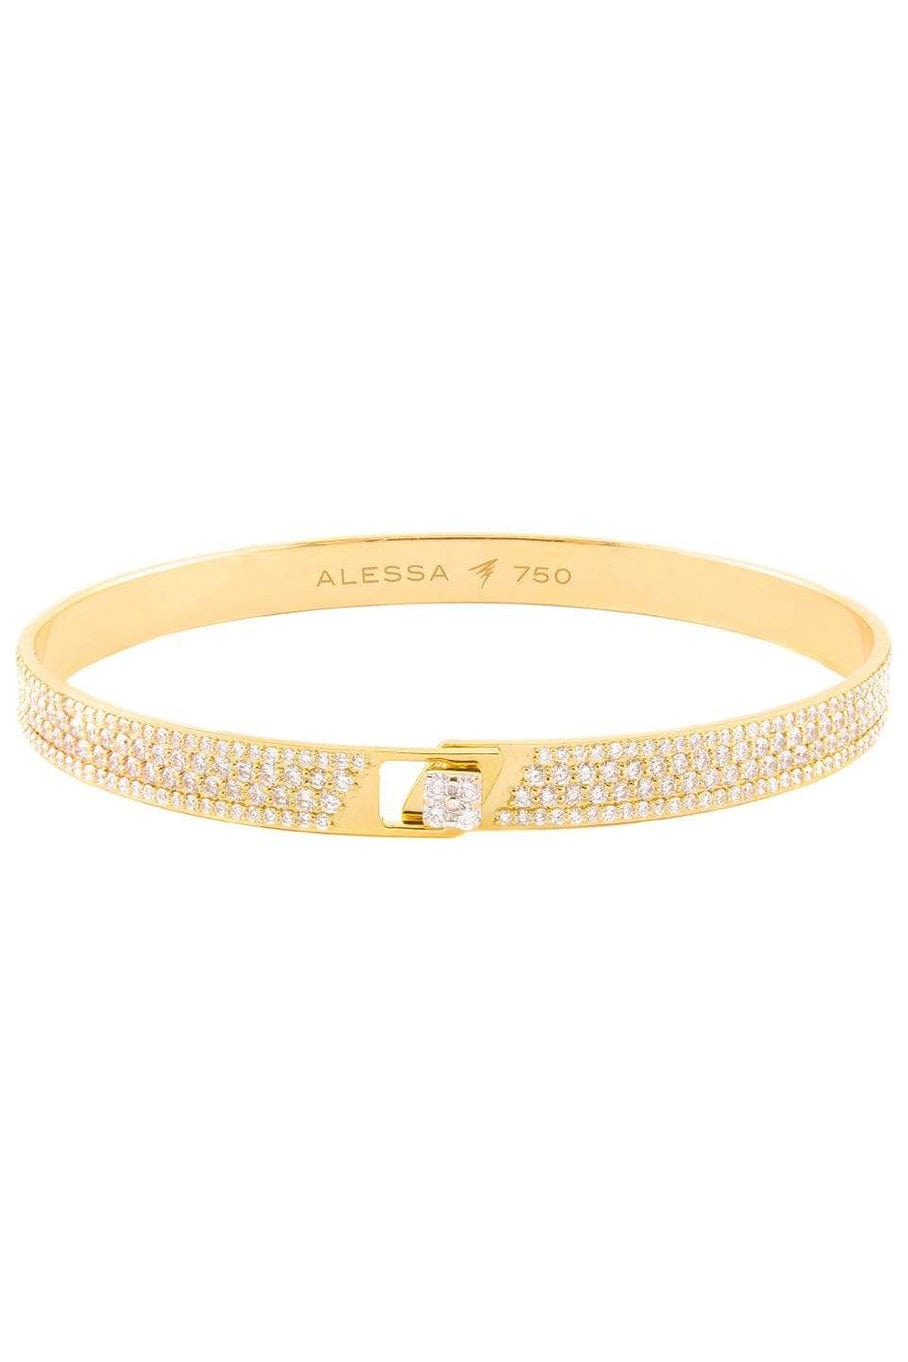 ALESSA JEWELRY-Spectrum Pave Diamond Bracelet-YELLOW GOLD